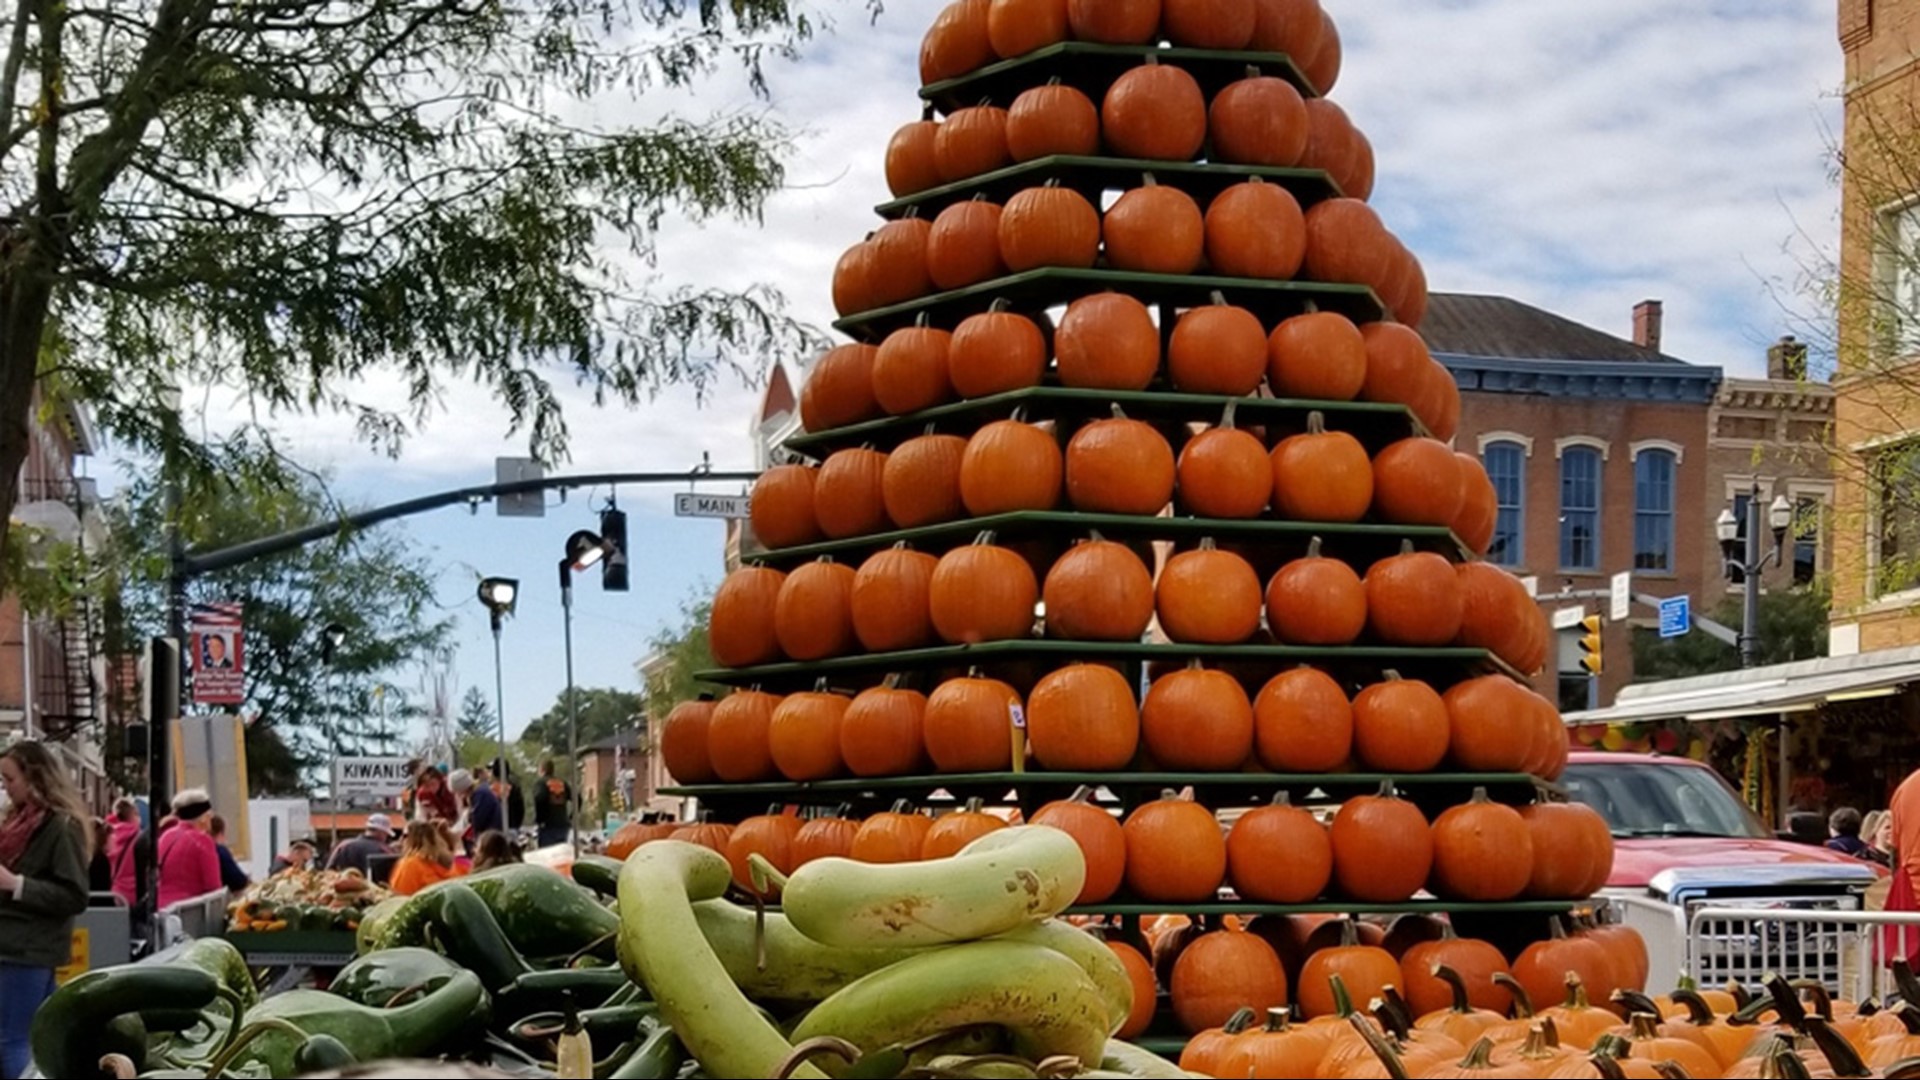 2019 Circleville Pumpkin Show Schedule, parking, live webcam